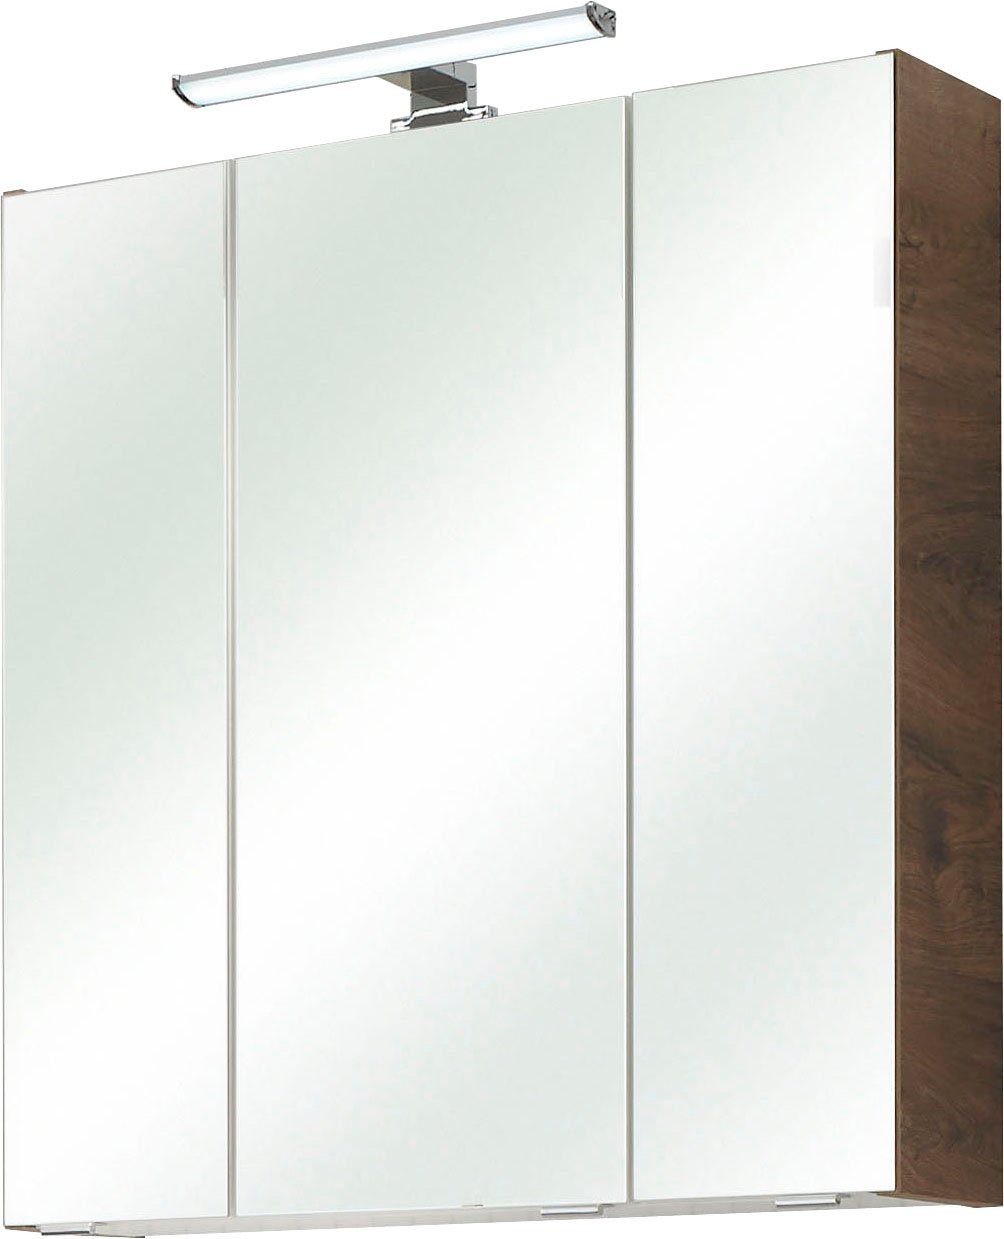 PELIPAL Spiegelschrank »Quickset« Breite 65 cm, 3-türig, LED-Beleuchtung,  Schalter-/Steckdosenbox